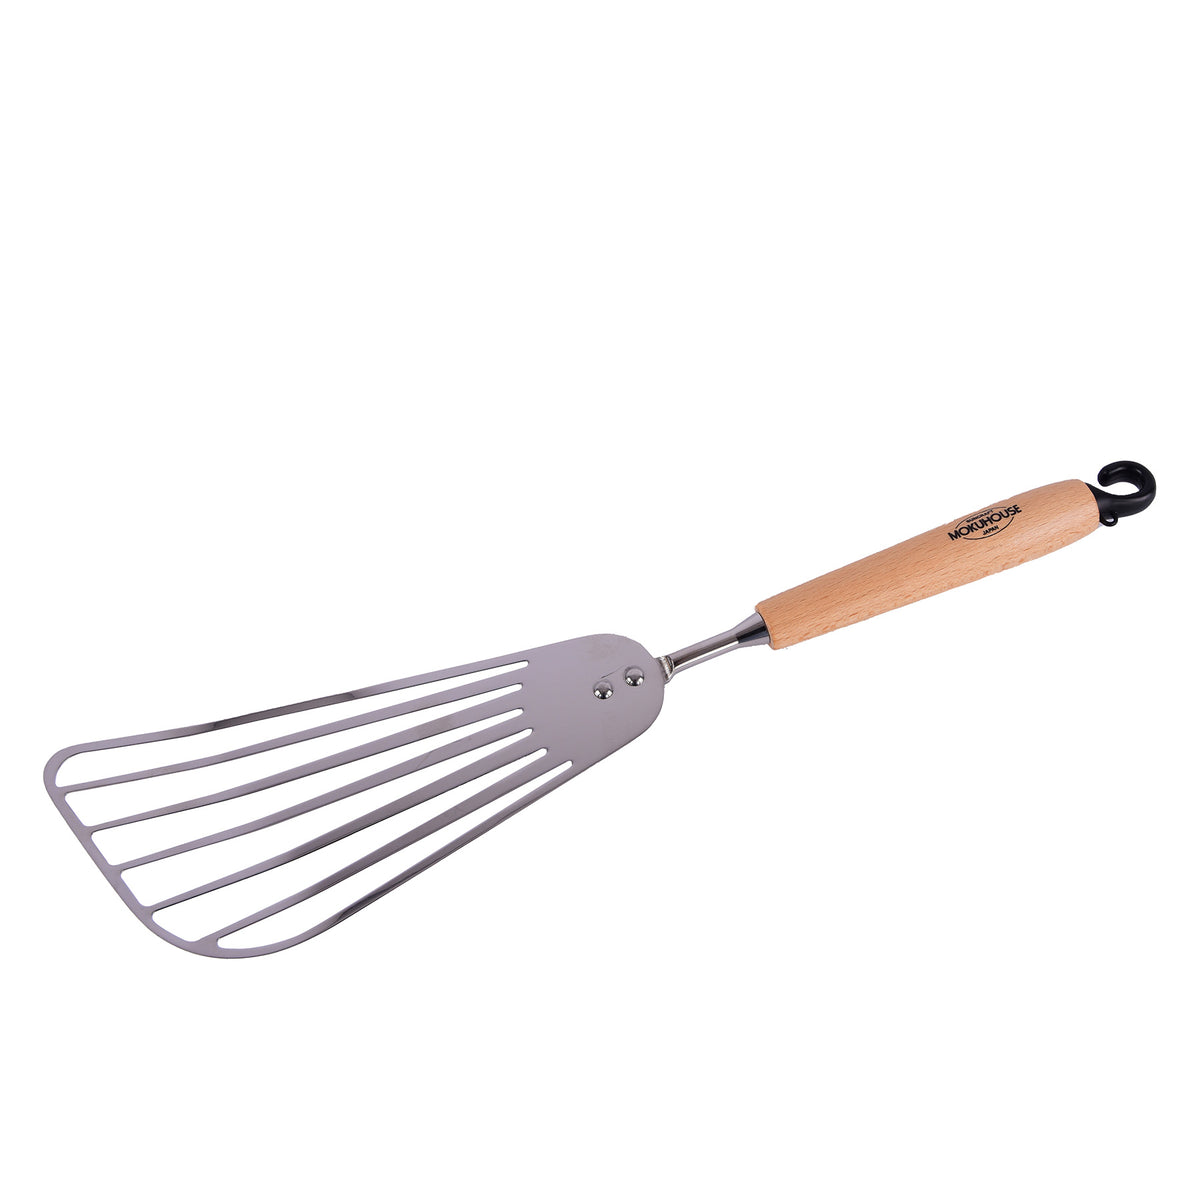 Narrow spatula with holes, NaturalSize: 30 cm